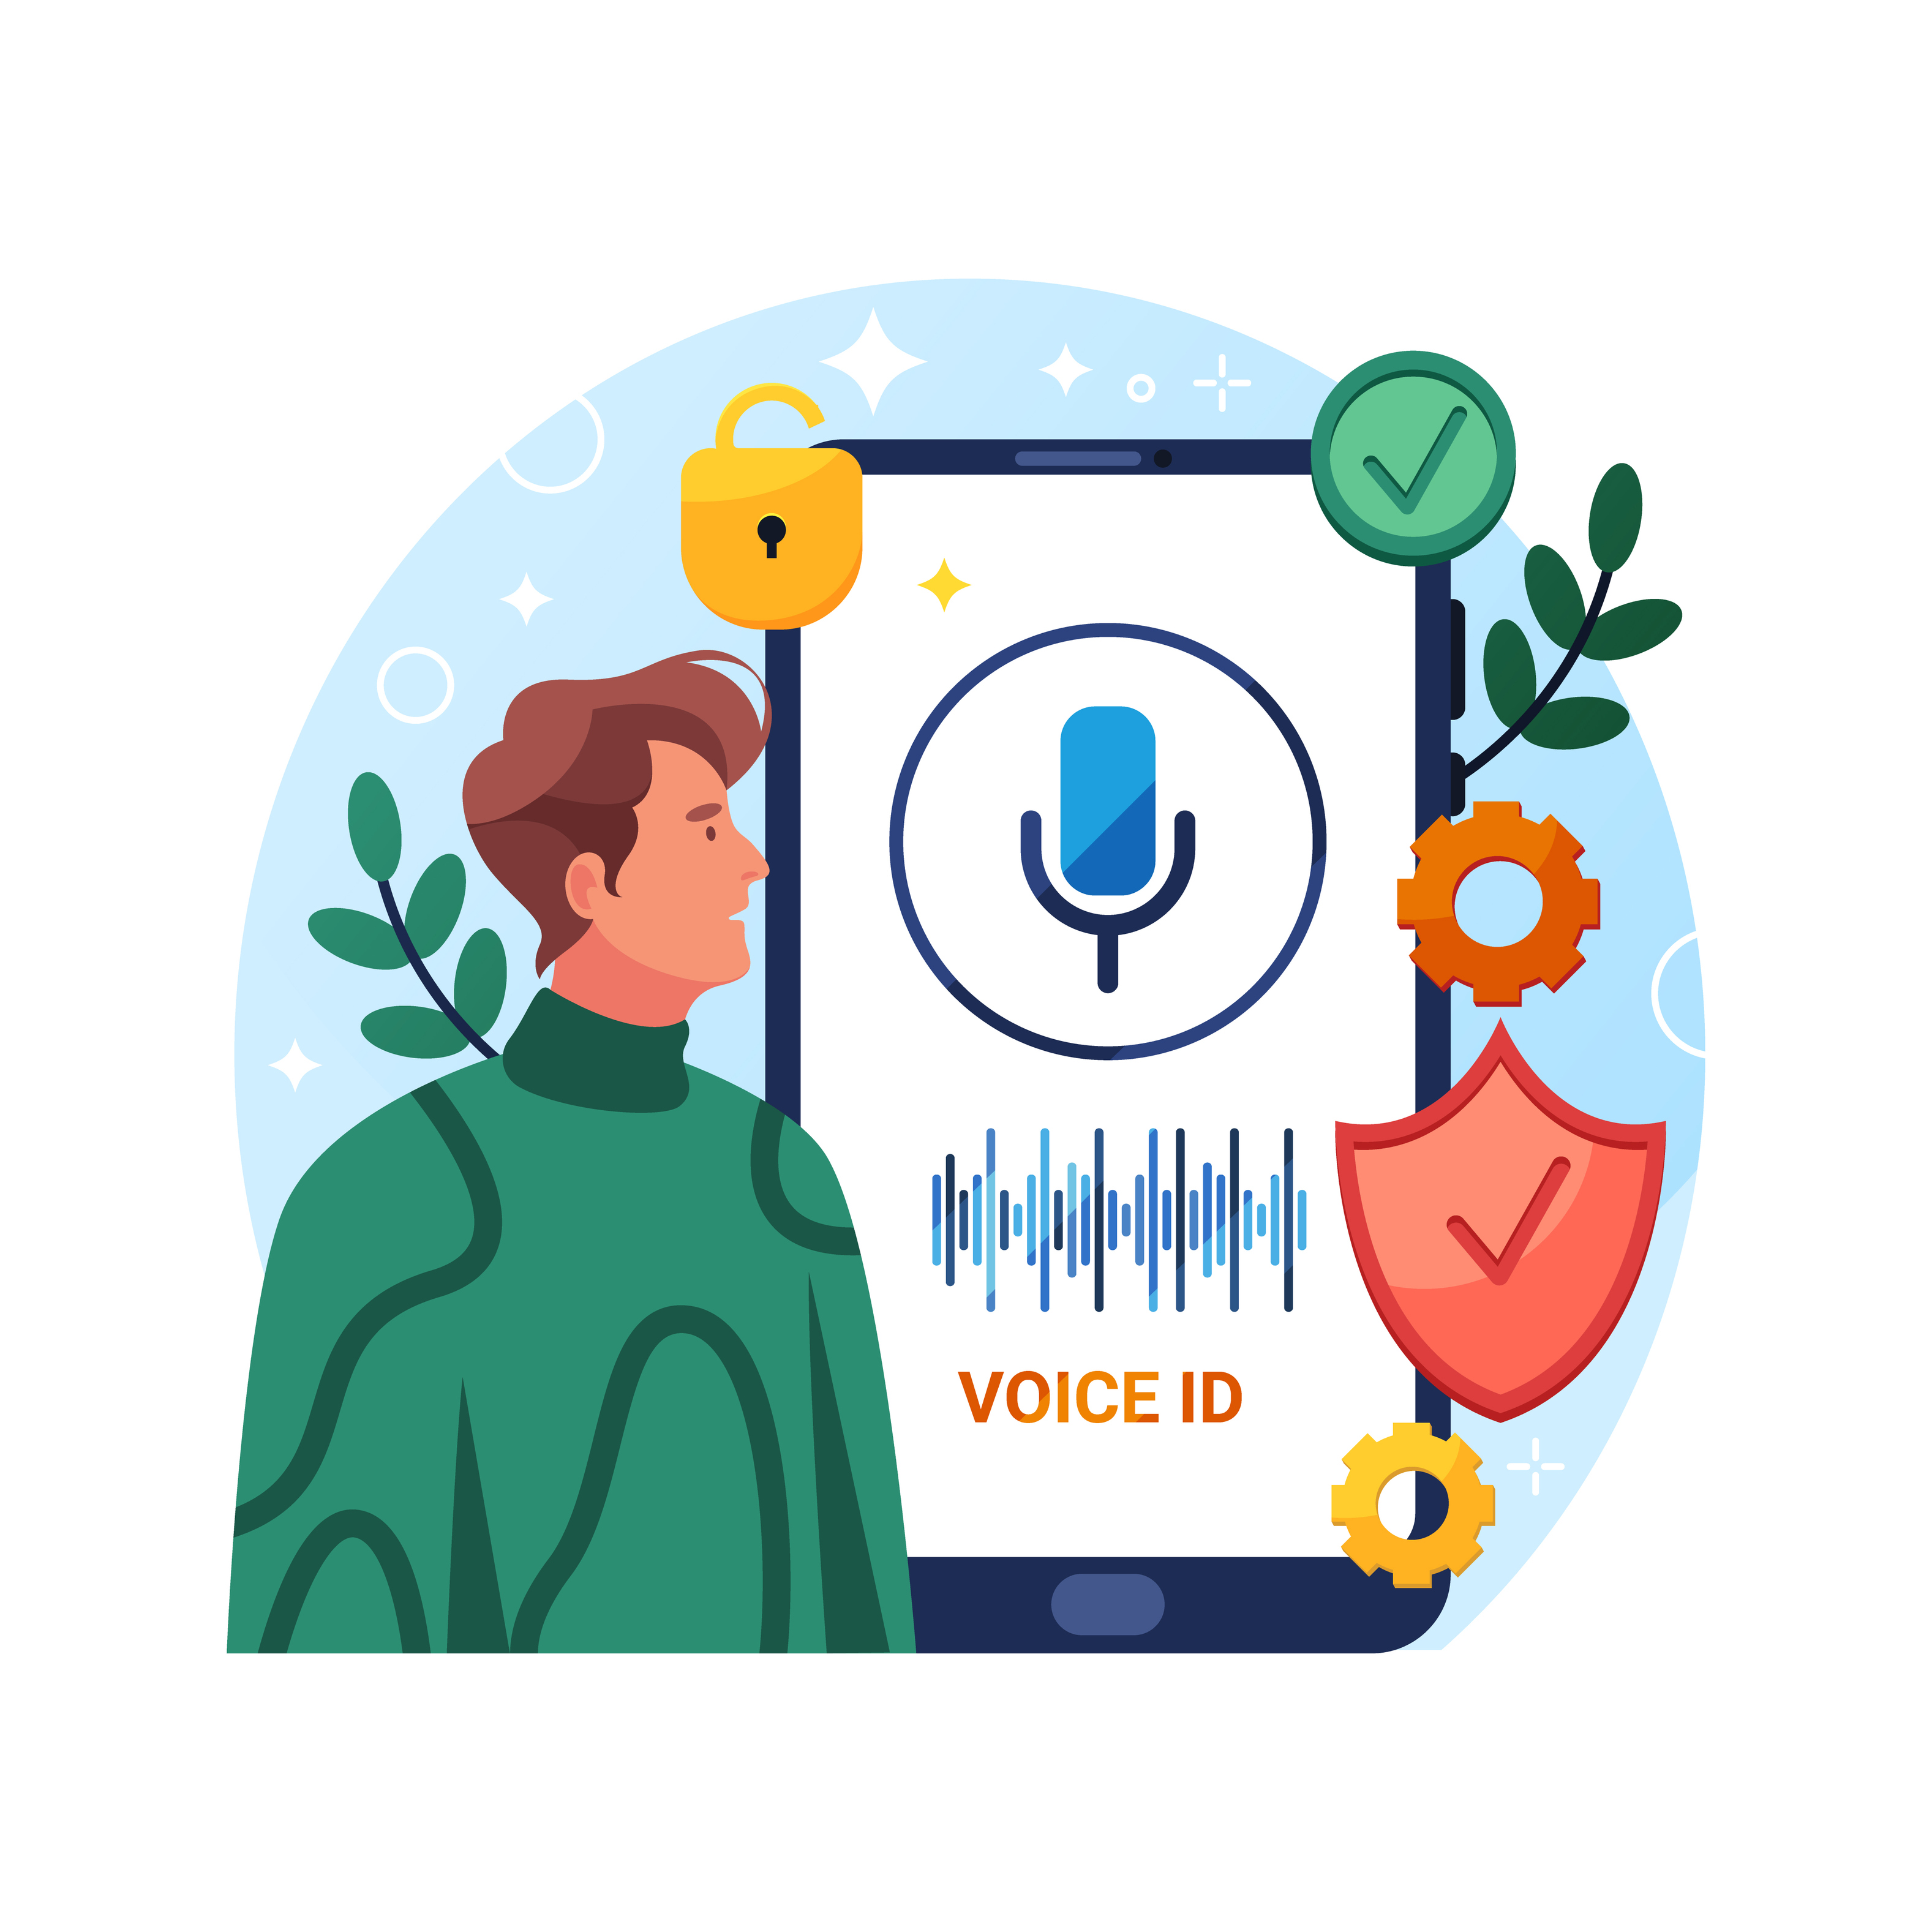 Voice ID